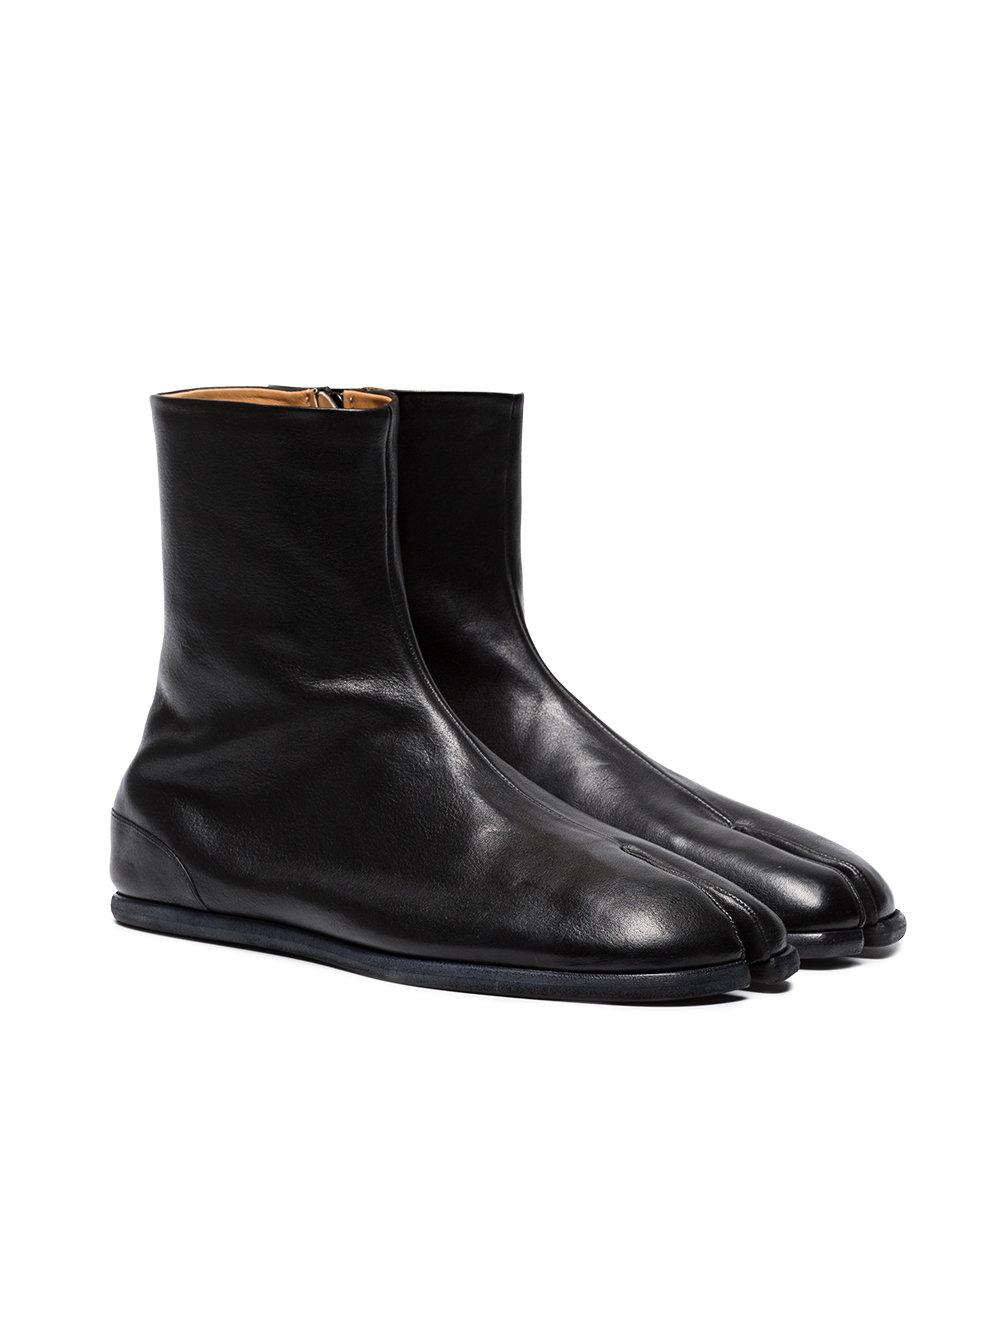 Maison Margiela Black Tabi Leather Ankle Boots for Men | Lyst